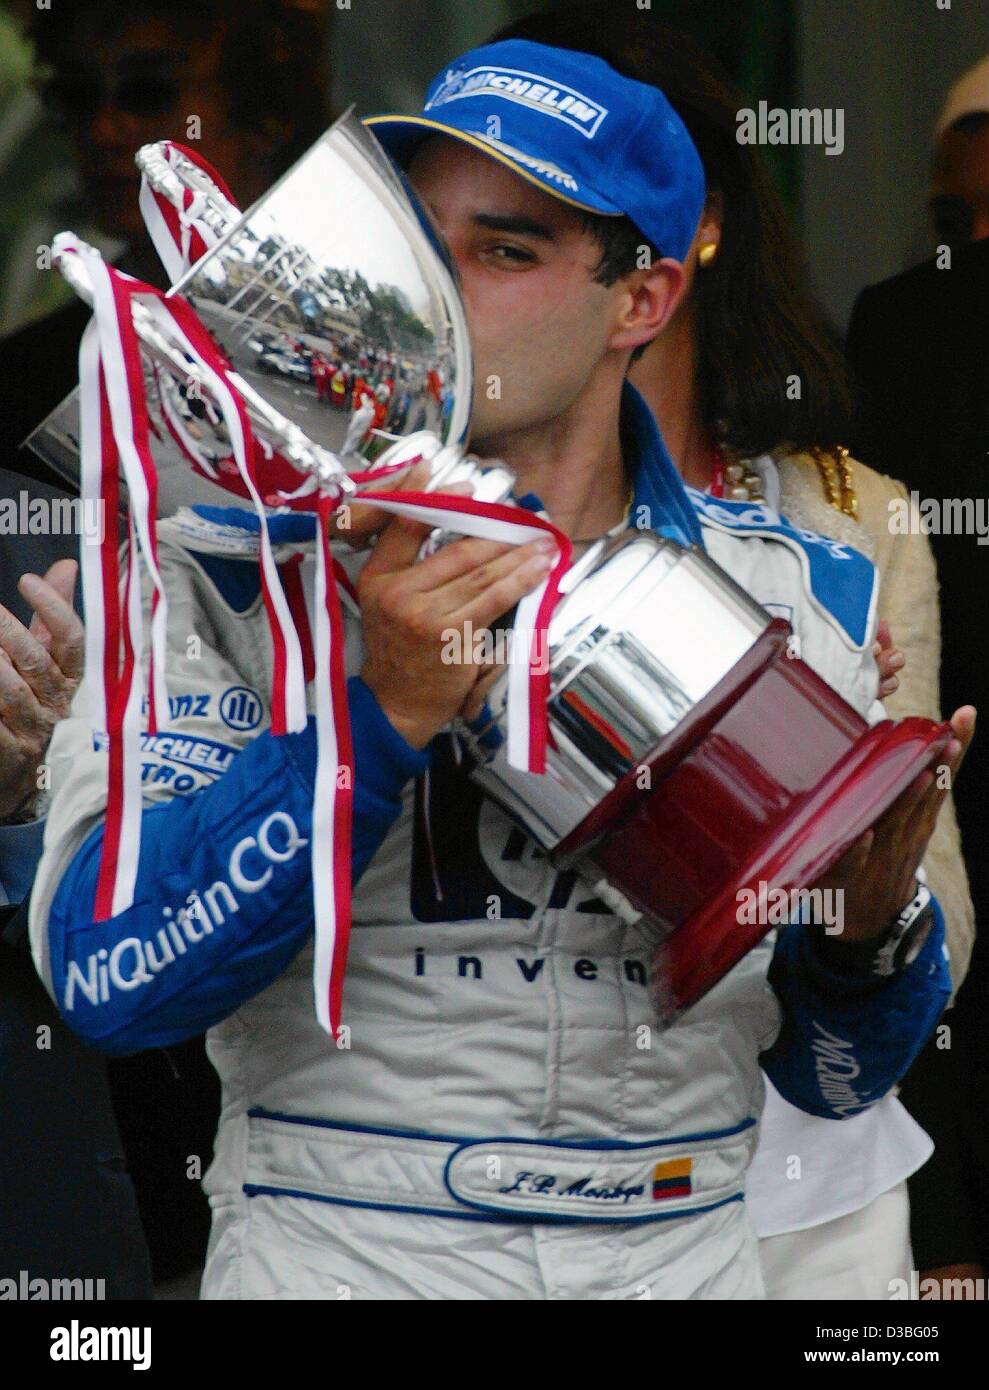 The trophy won at the 2003 Monaco Grand Prix by Juan Pablo…